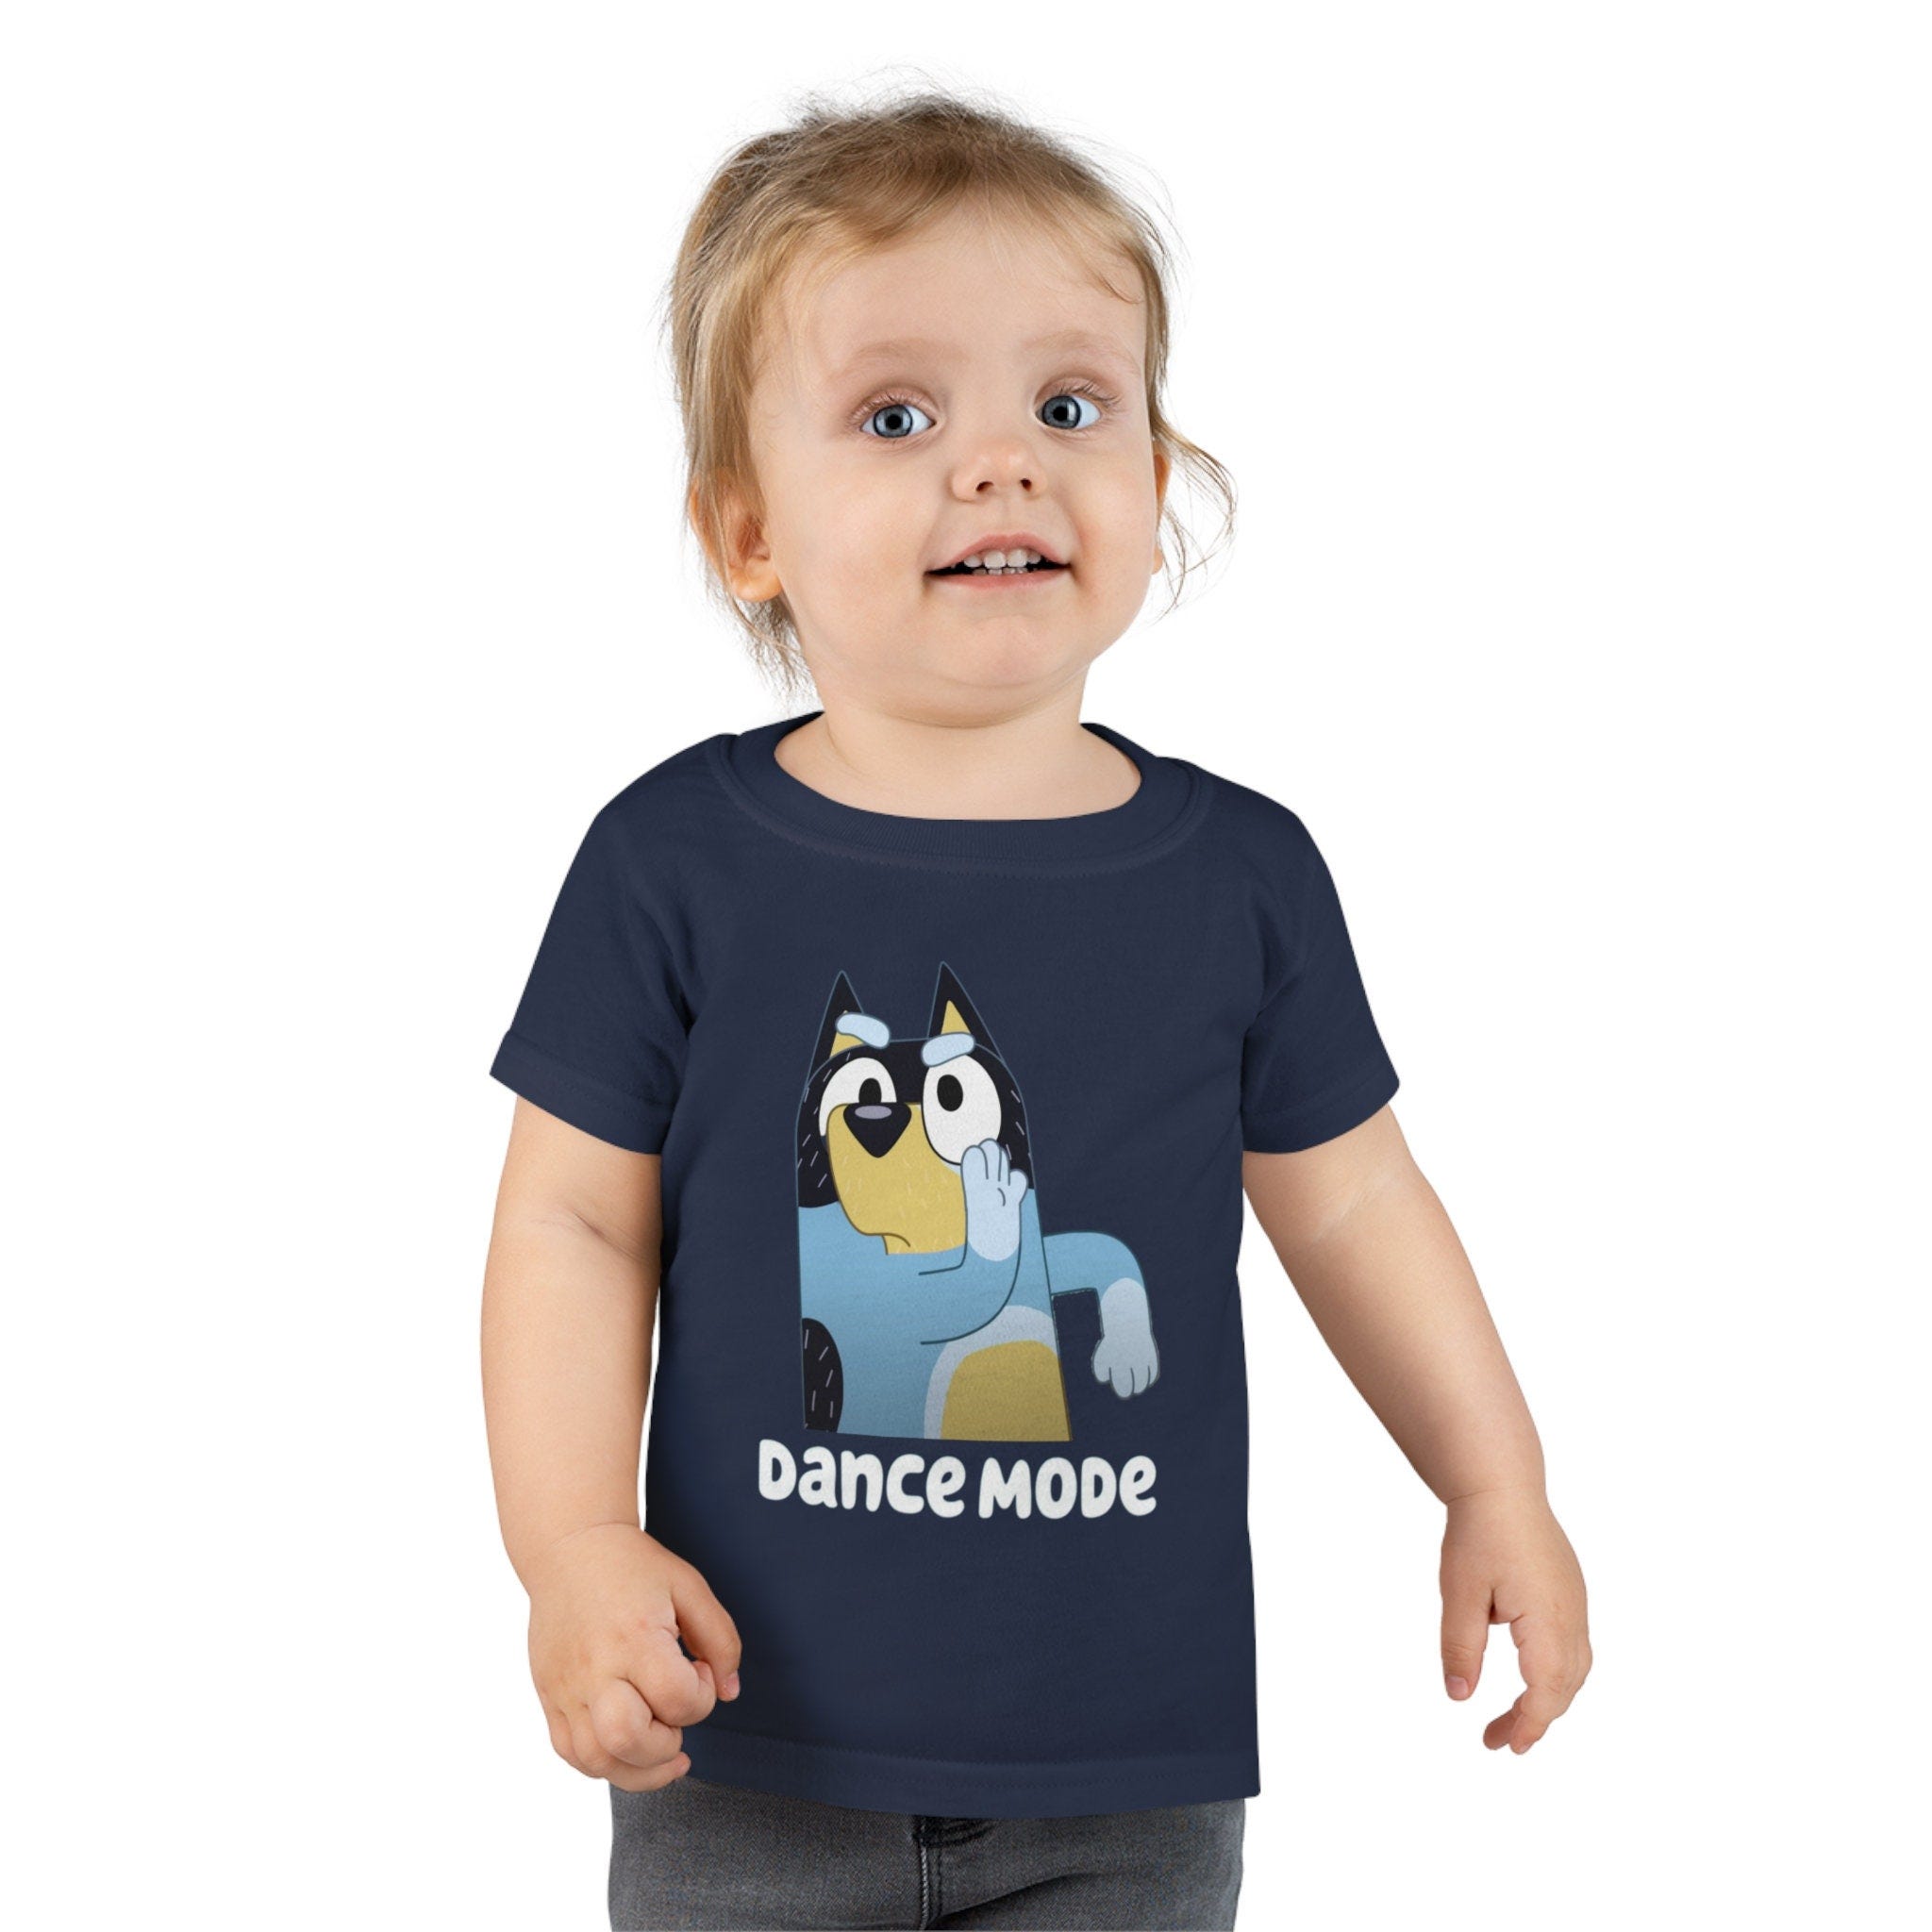 Bluey Dance Mode Toddler T-shirt